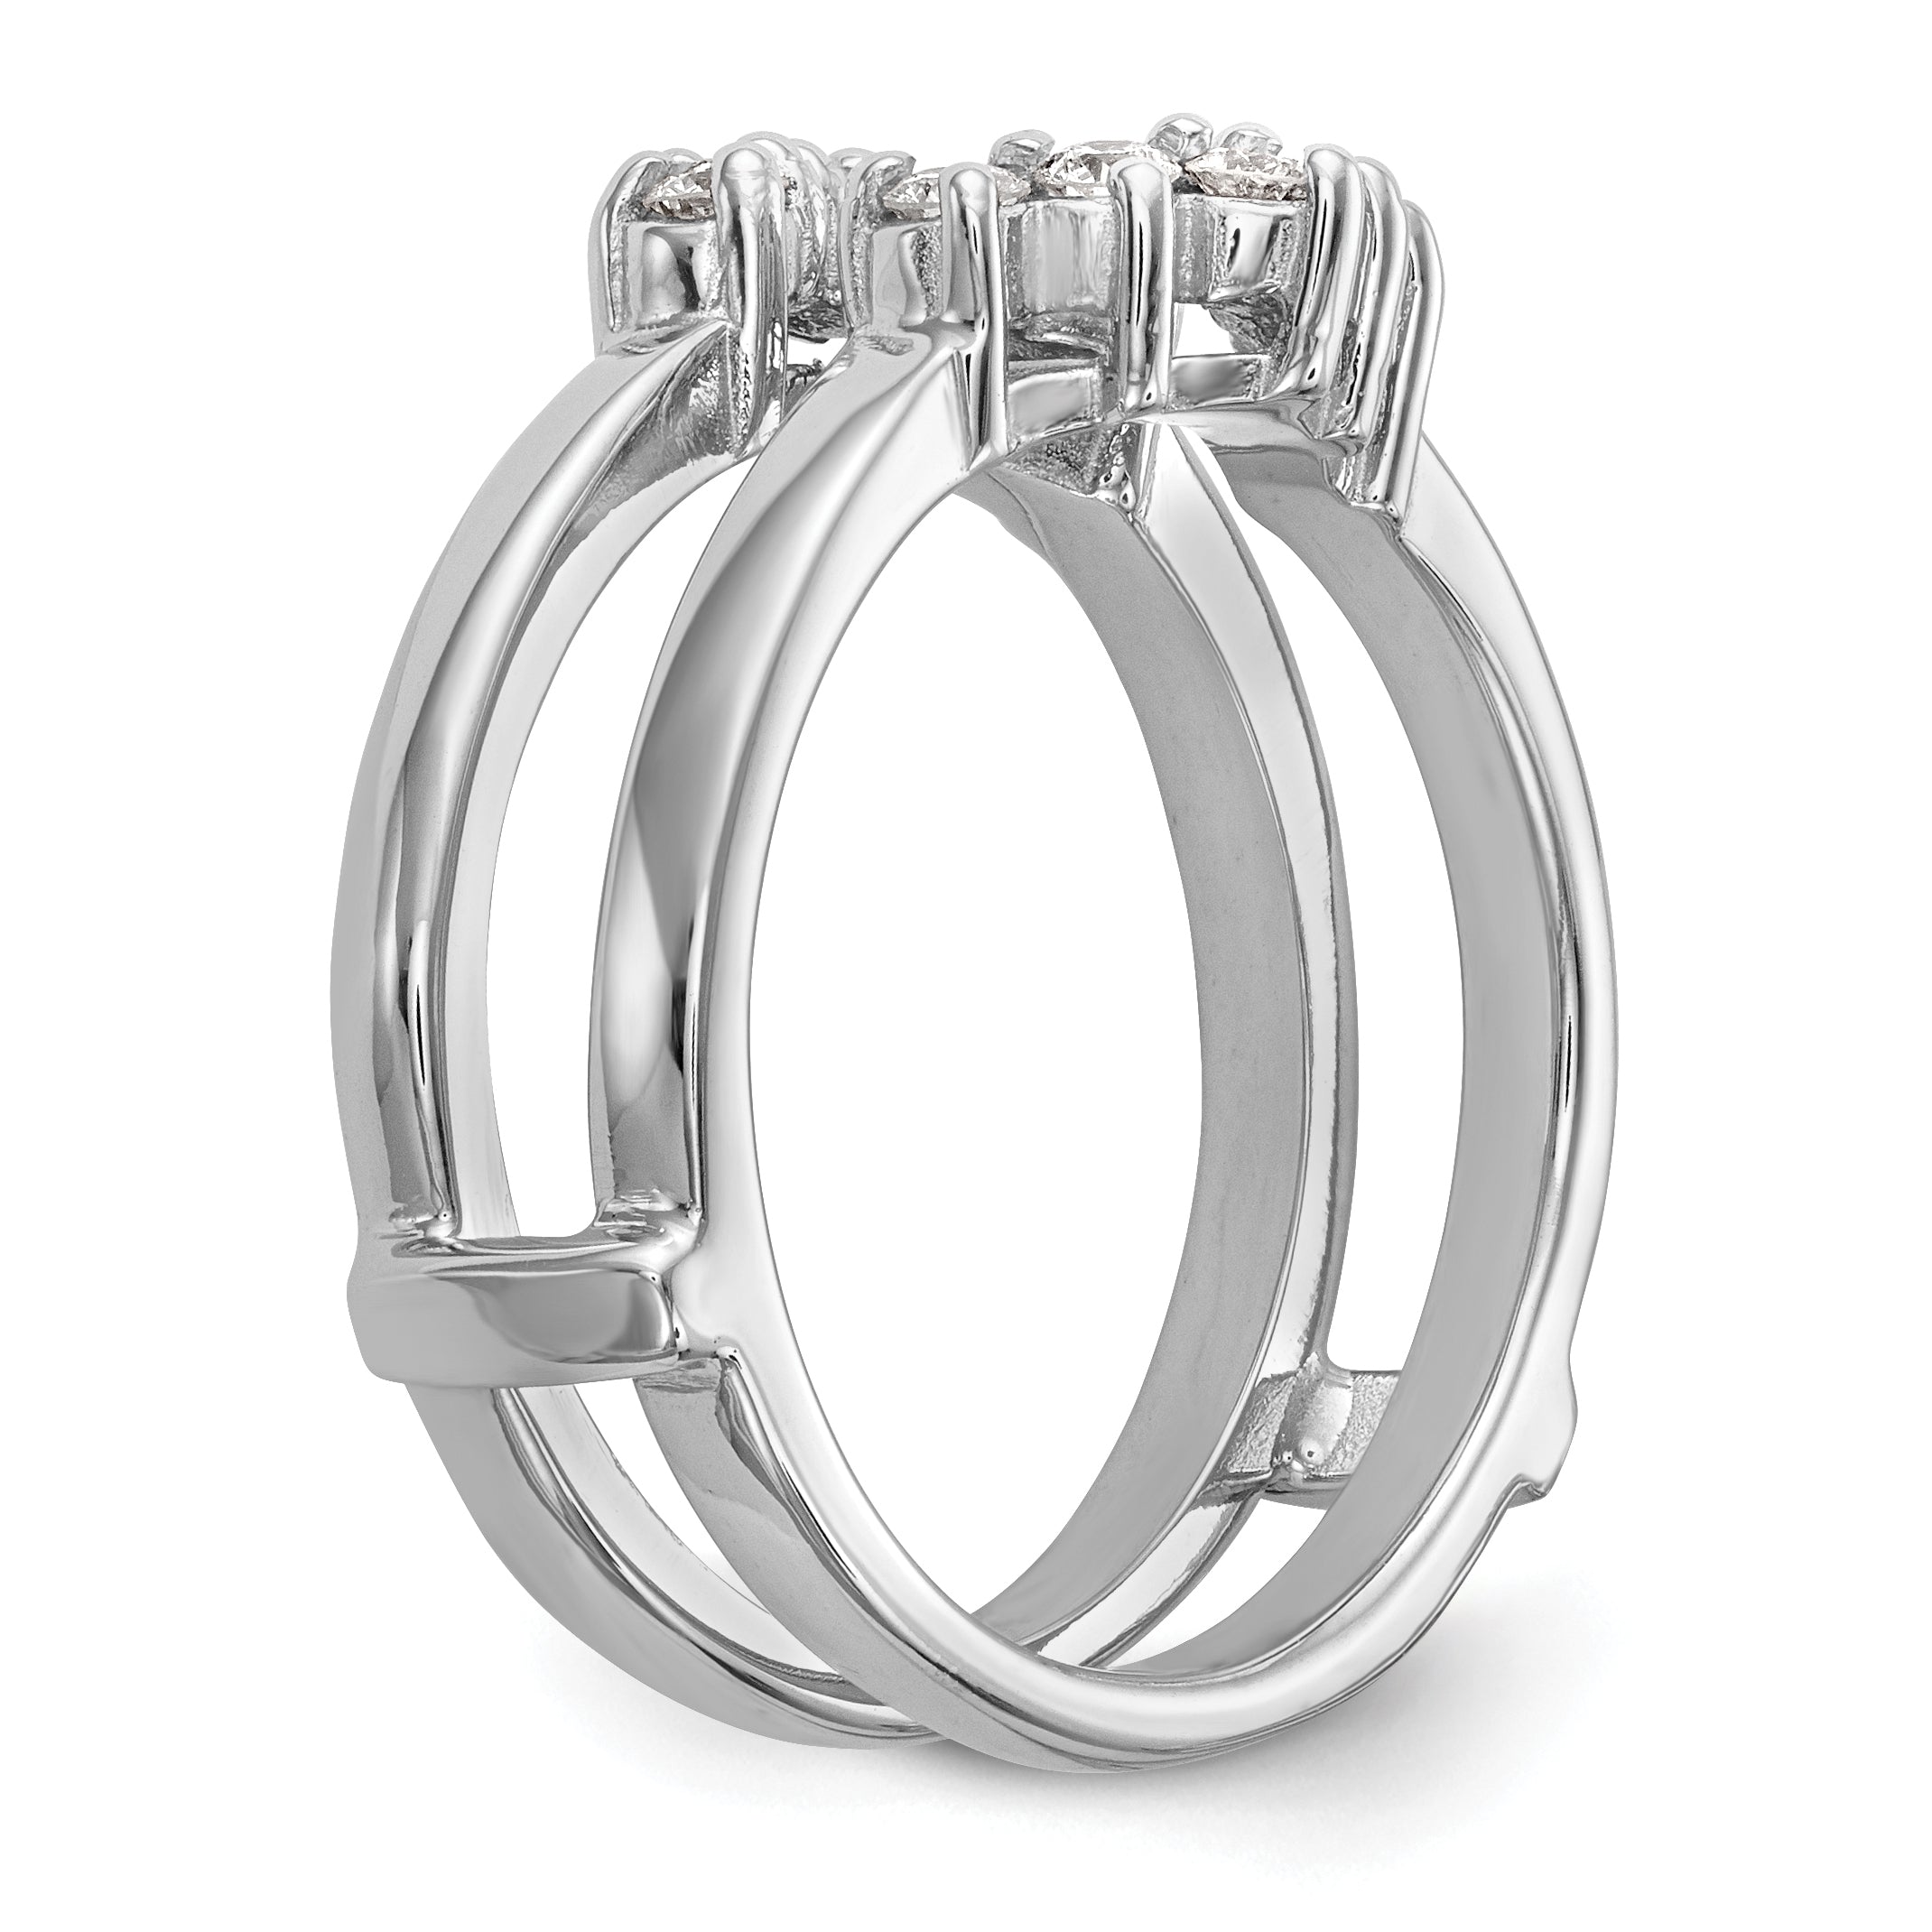 14K White Gold 1/3 carat Diamond Complete Ring Guard